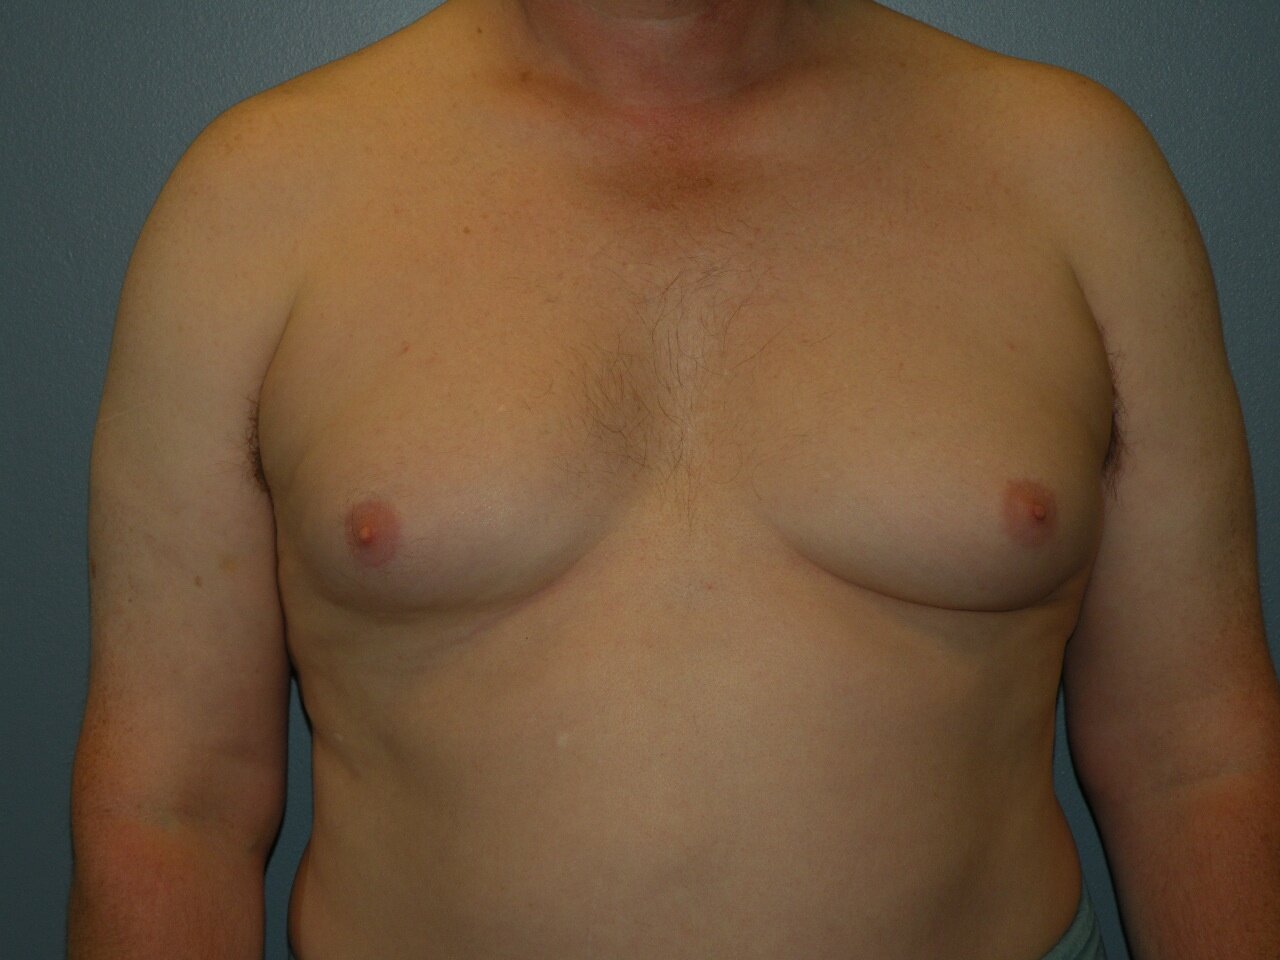 Patient A - Grade IIA Gynecomastia - full female size breast with